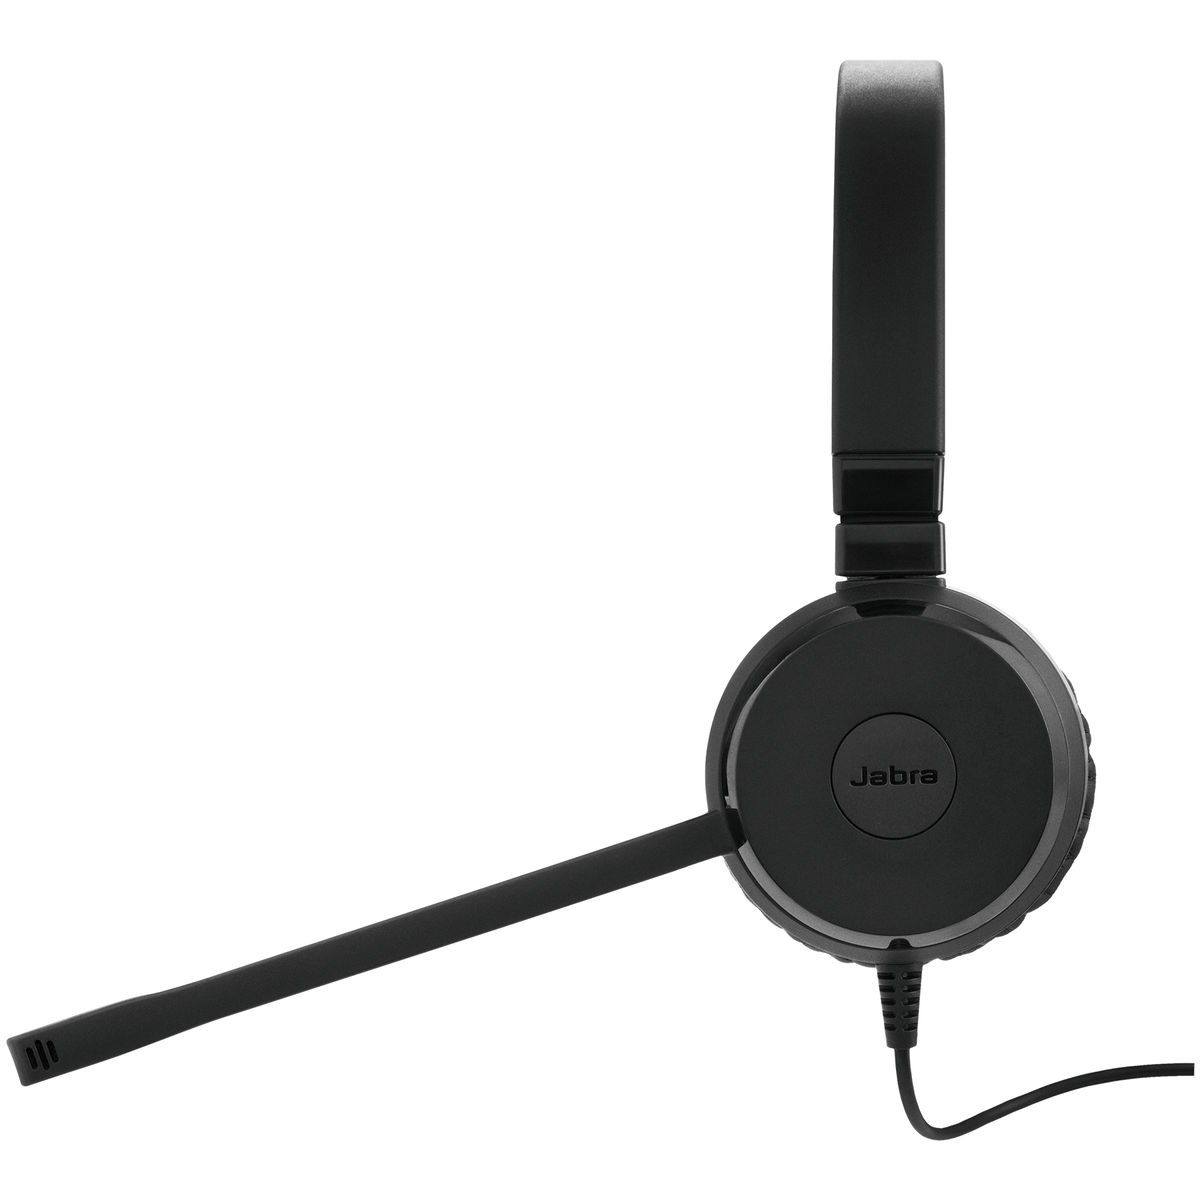 MS schwarz II On-ear Evolve binaural, JABRA Headset 30